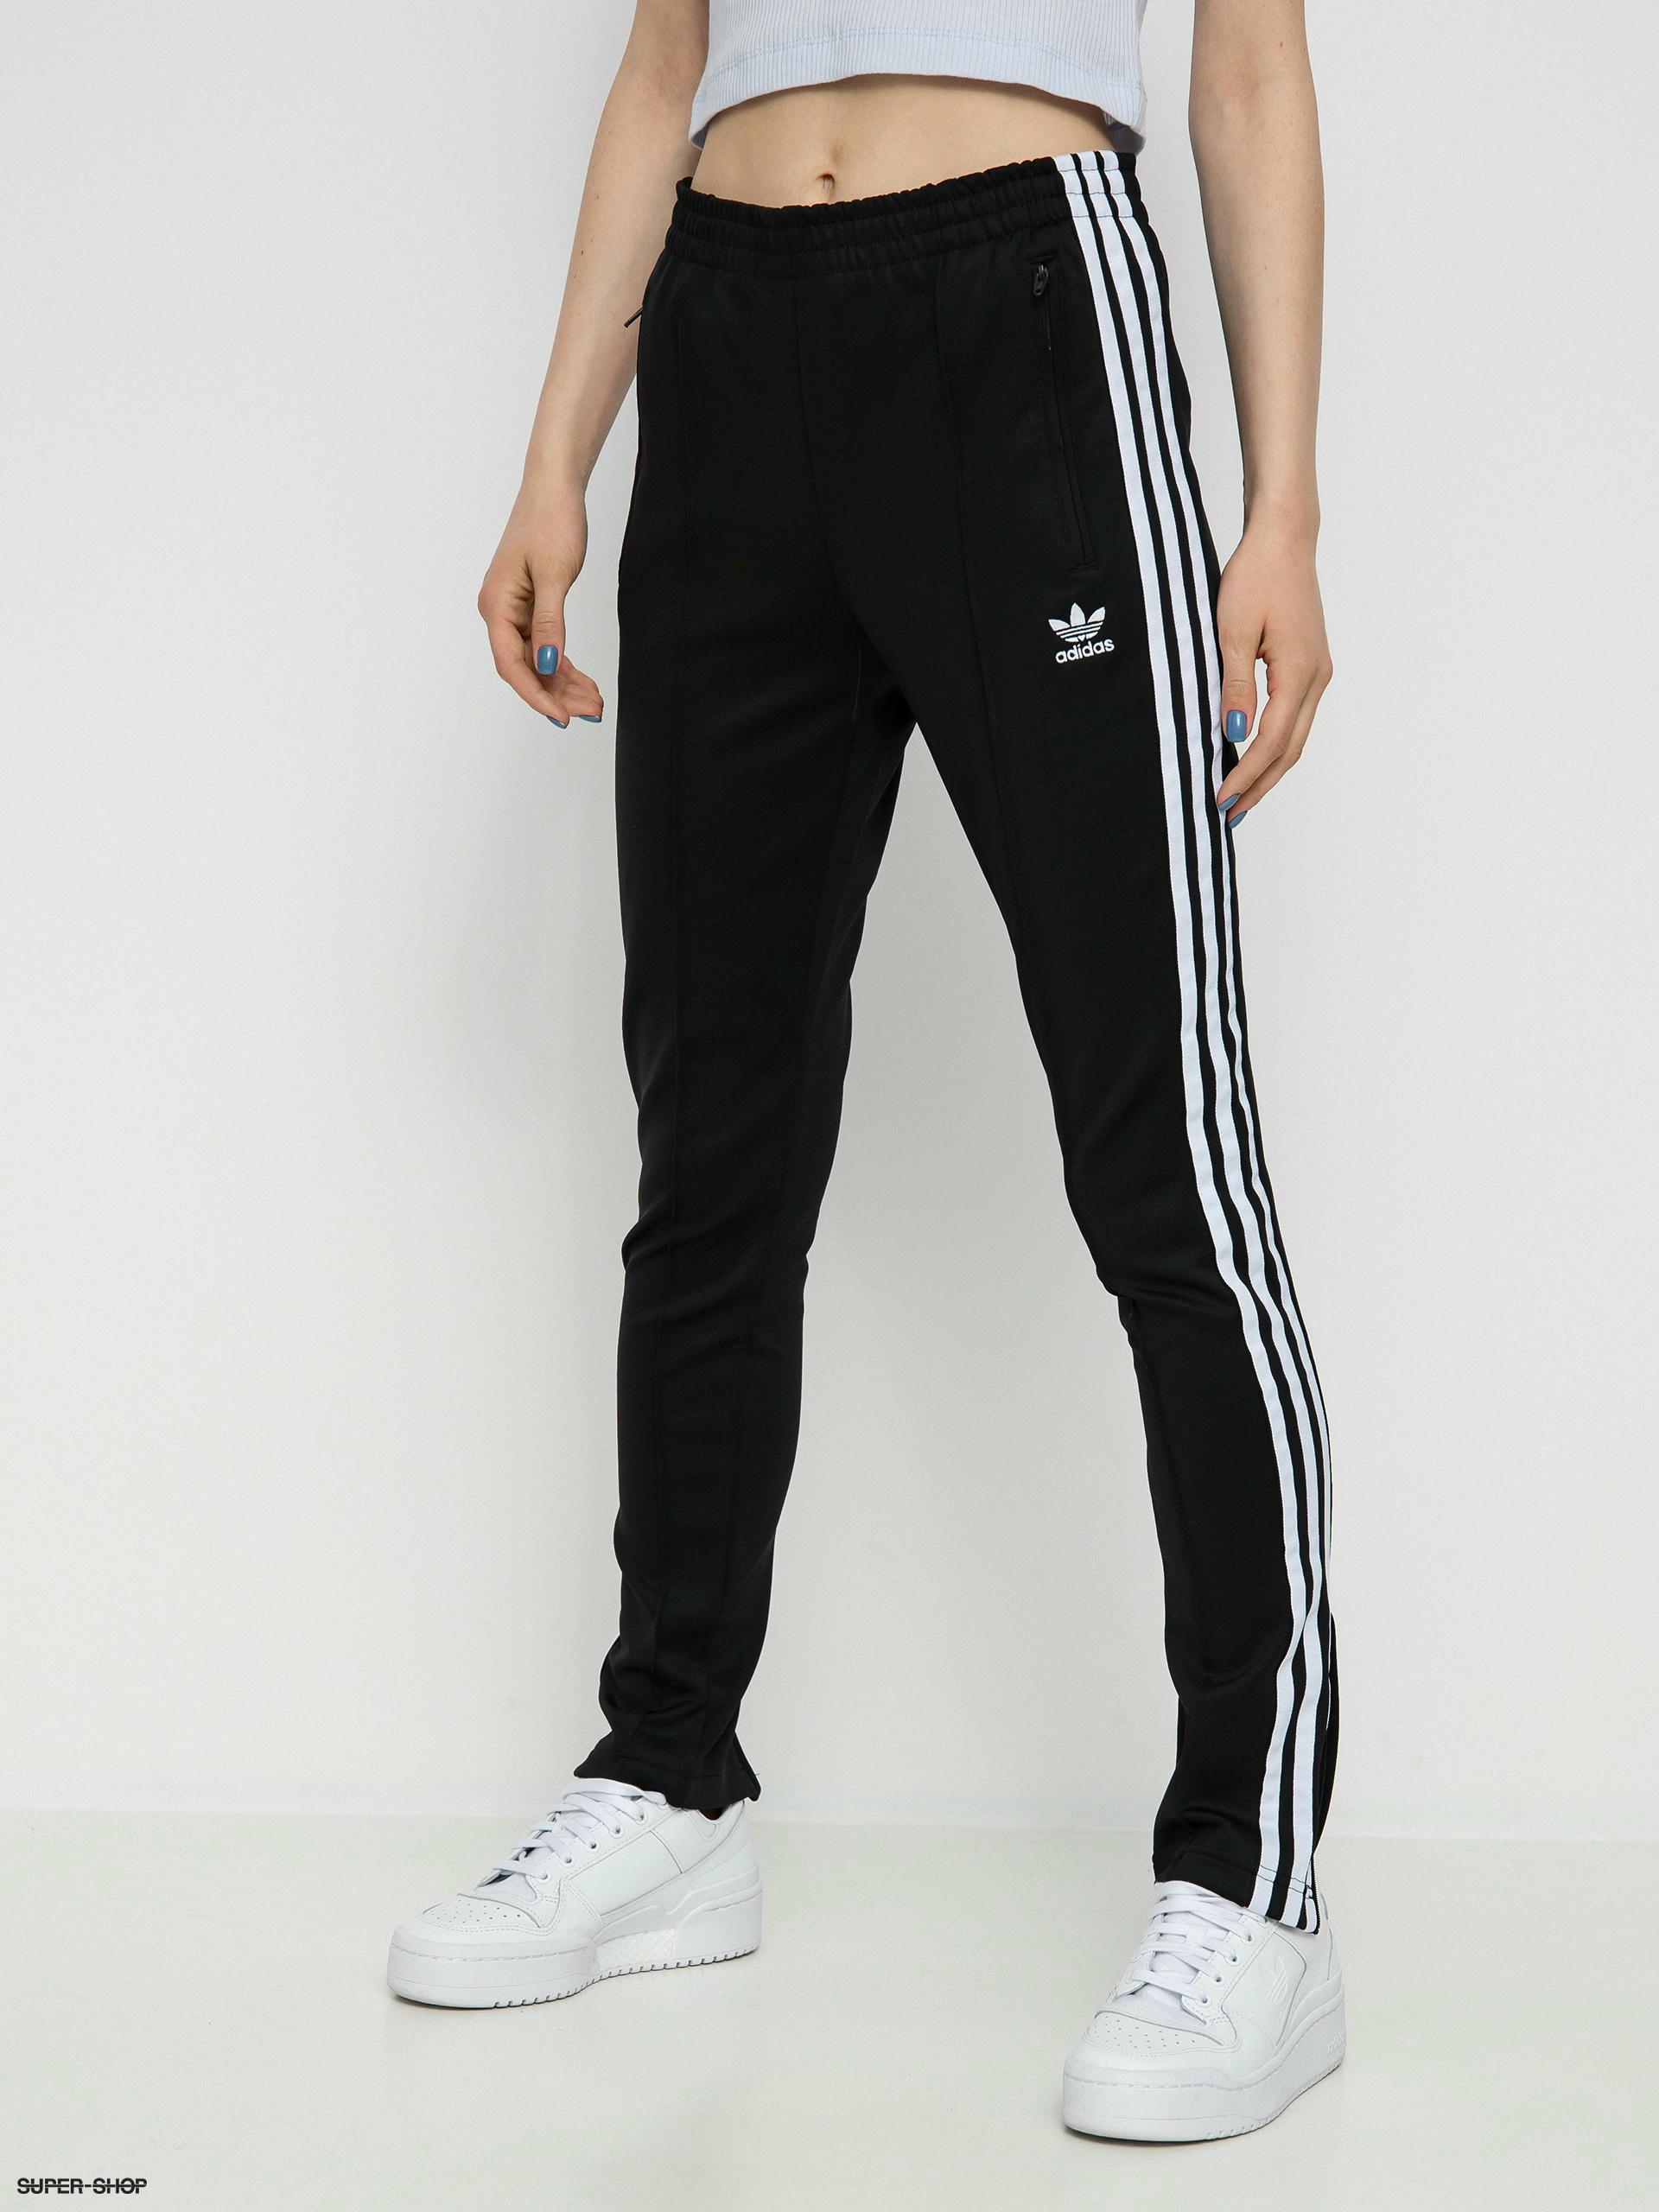 adidas Originals Sst Pants Pb Pants Wmn (black/white)